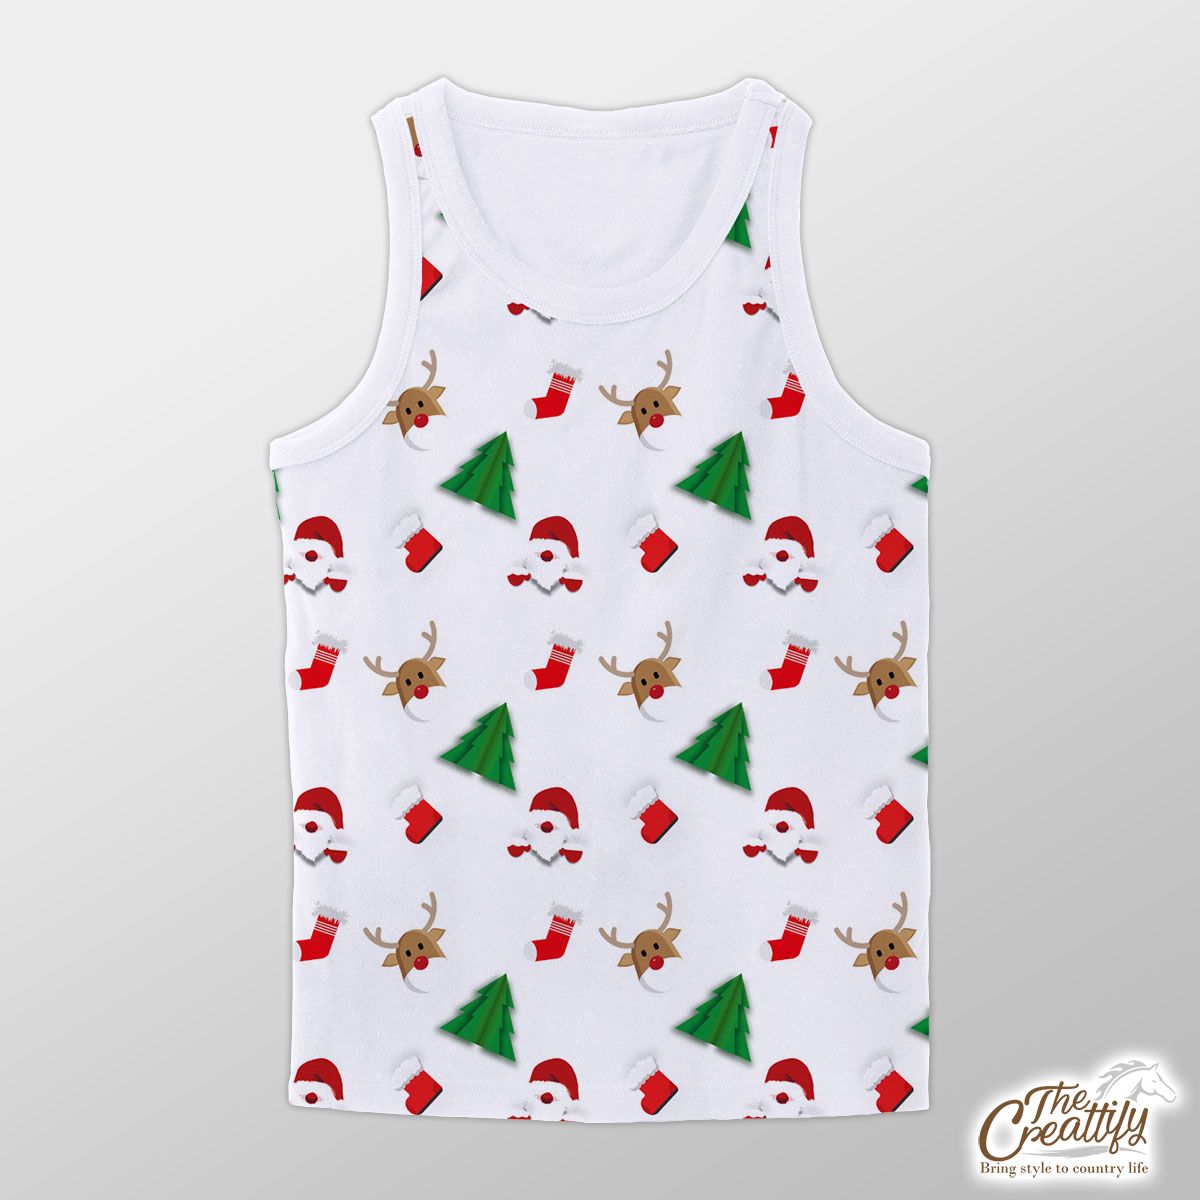 Santa Claus, Pine Tree Silhouette, Christmas Reindeer And Red Socks Seamless Pattern Unisex Tank Top